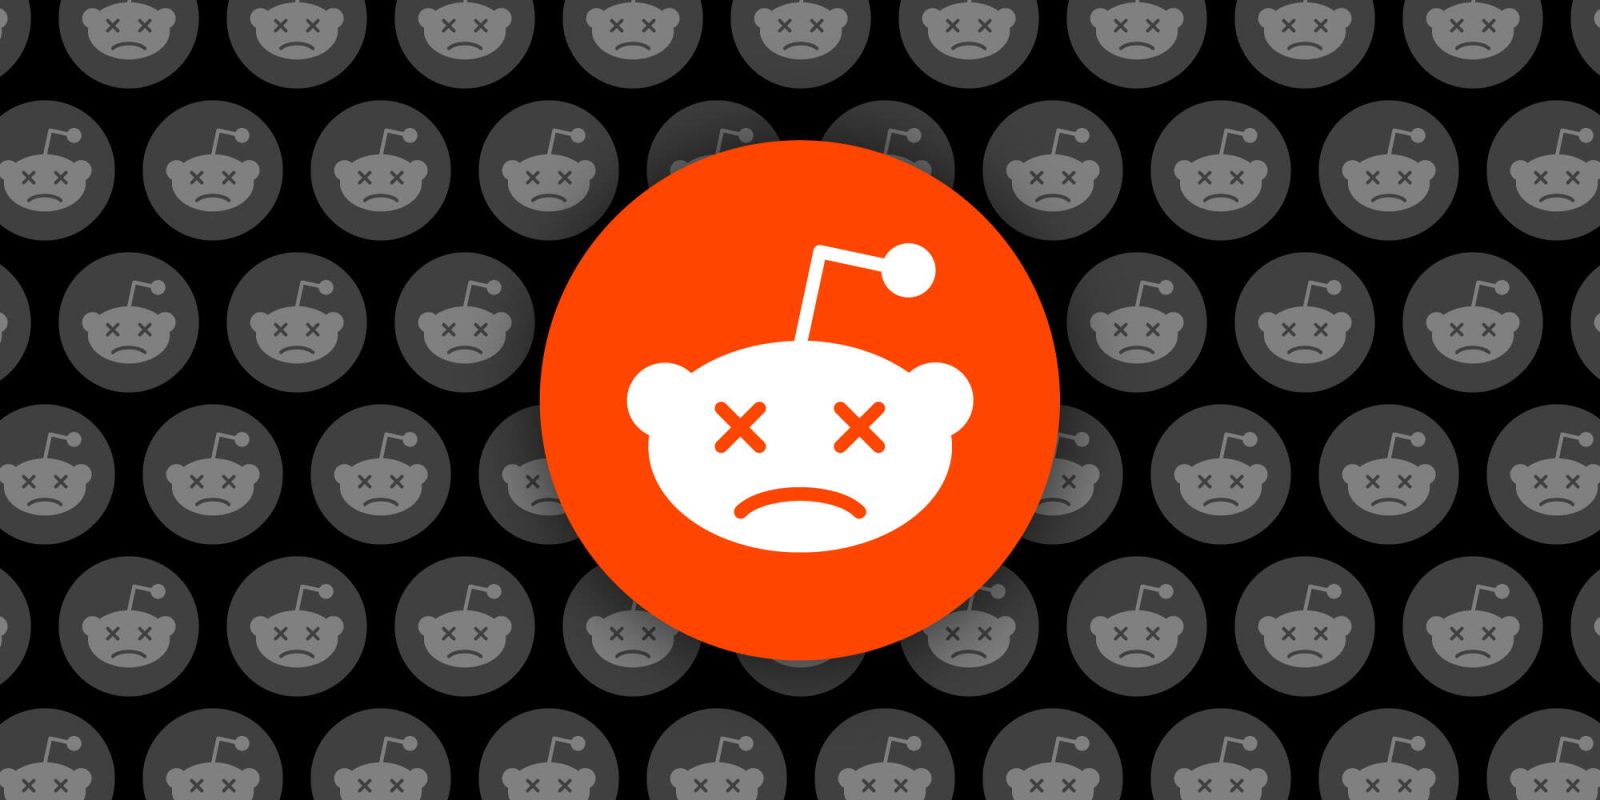 Reddit threatened protesting moderators: Subreddits ‘cannot remain closed’